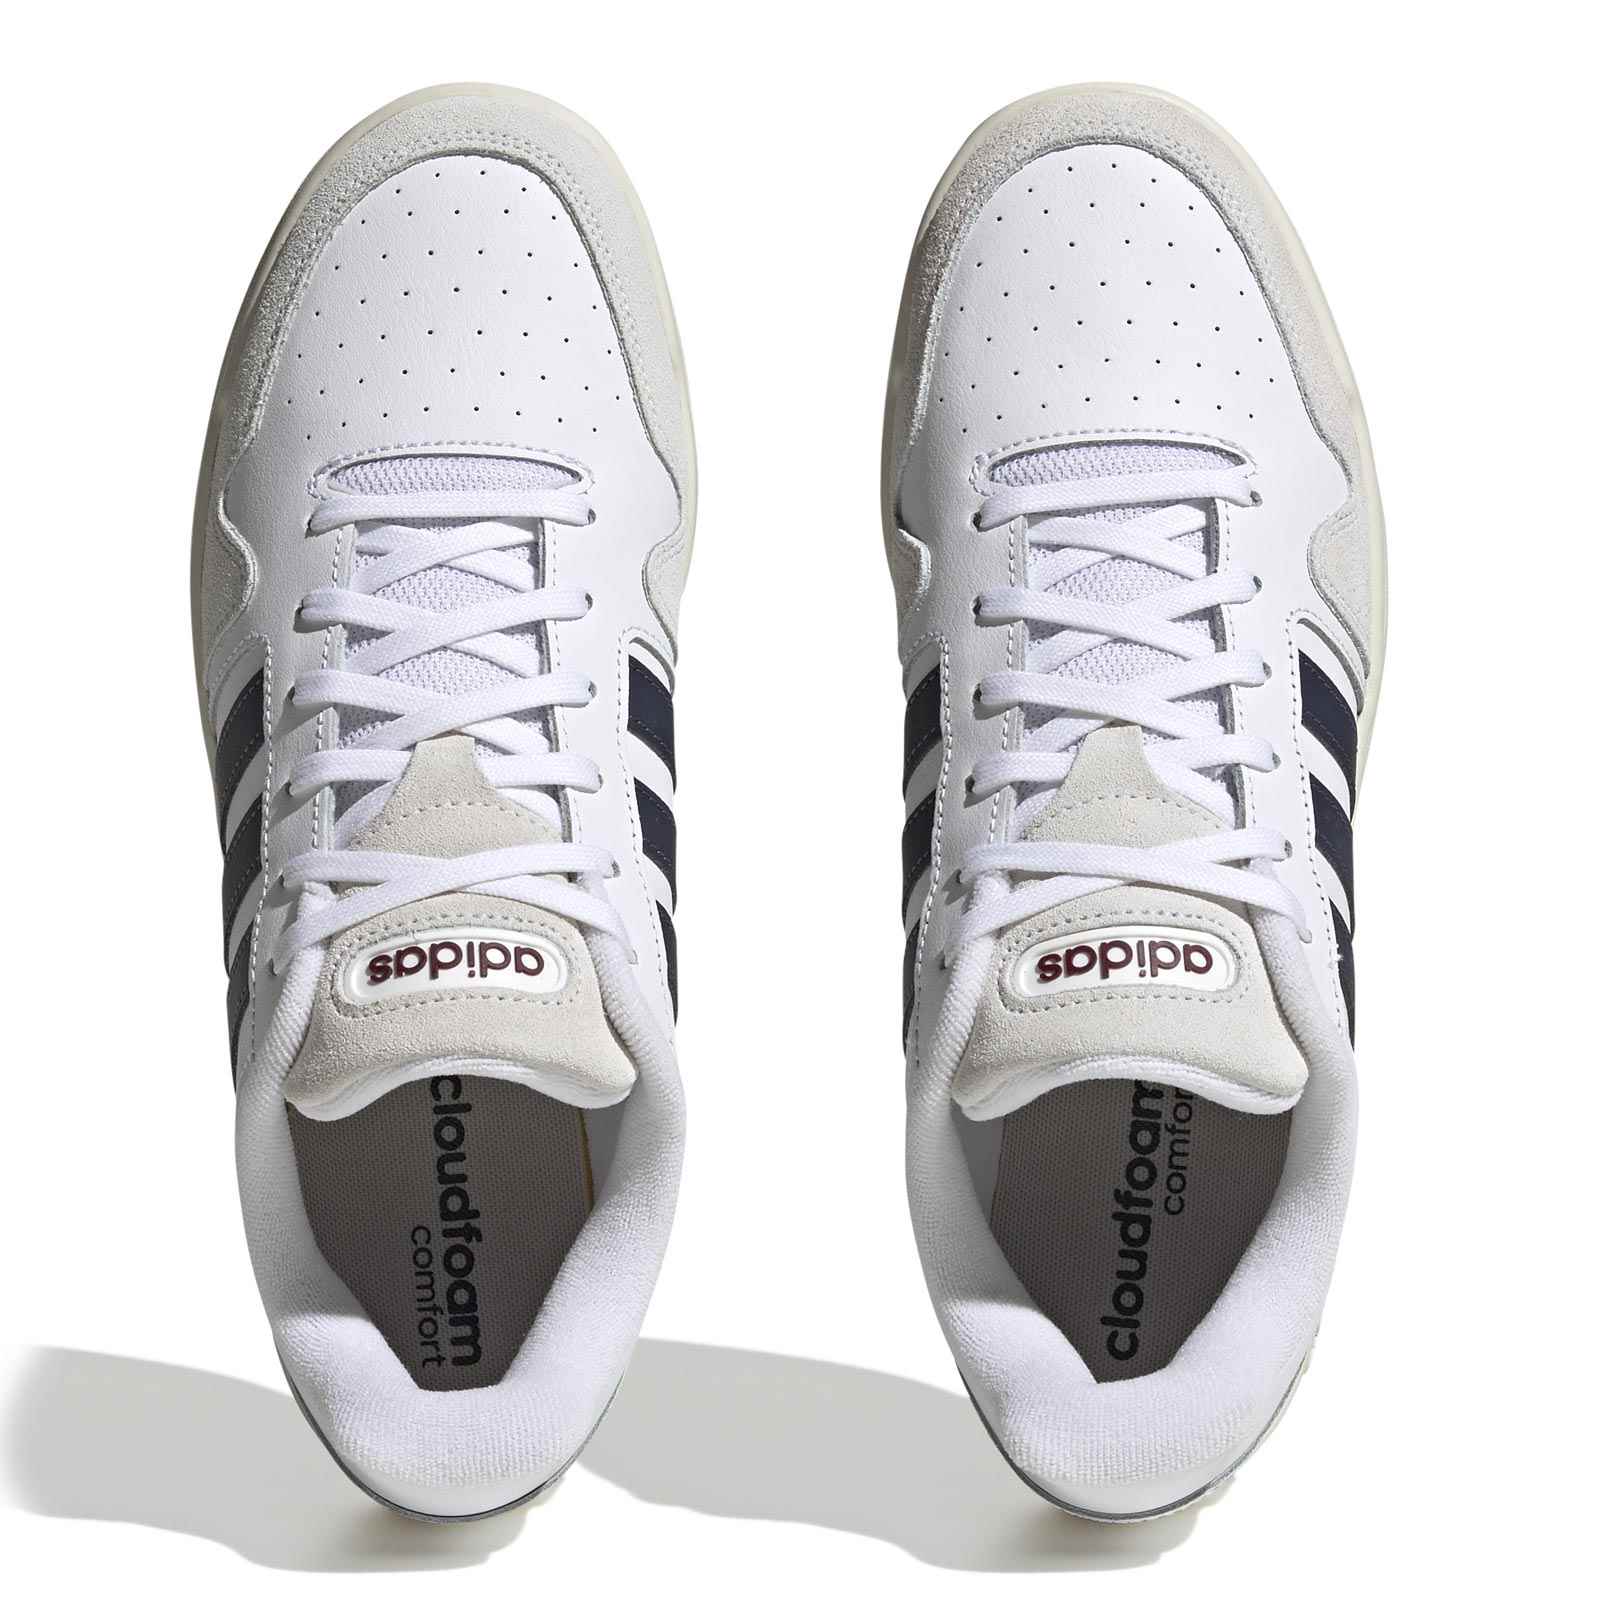 adidas Postmove Super Lifestyle Low Mens Basketball Shoes